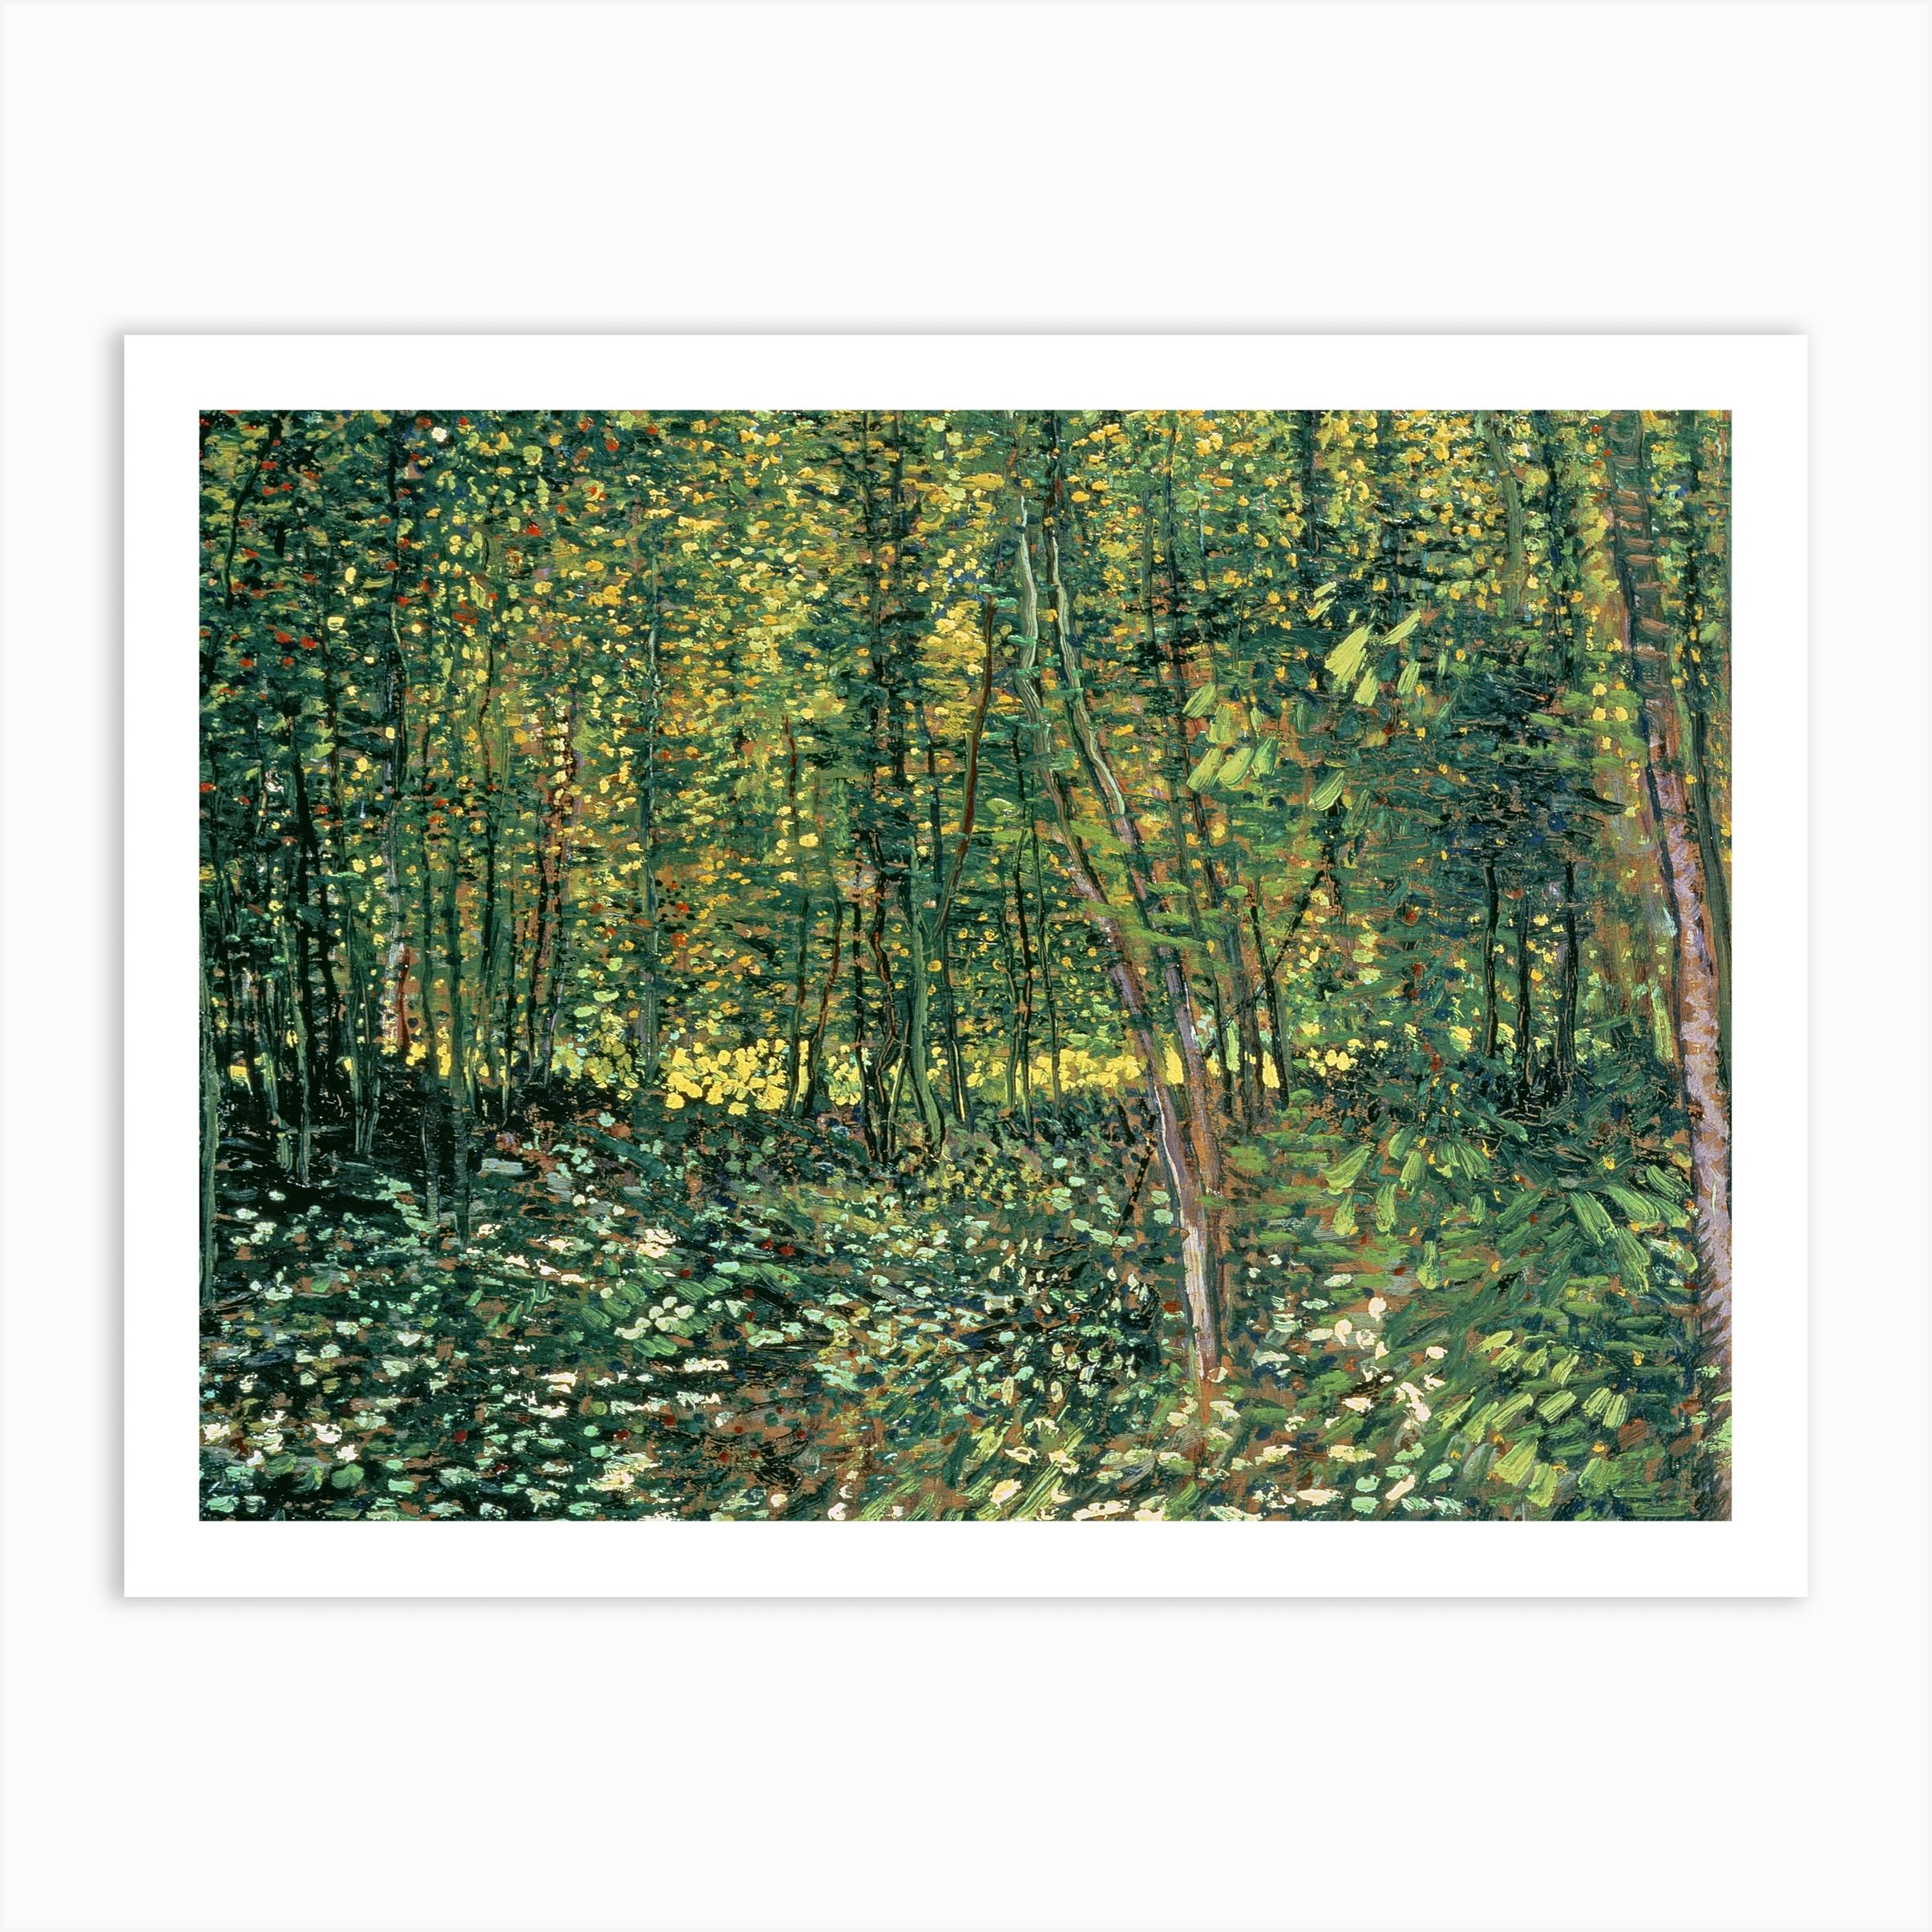 Trees and Undergrowth Vincent Van Gogh VG395 Repro Art Print A4 A3 A2 A1 